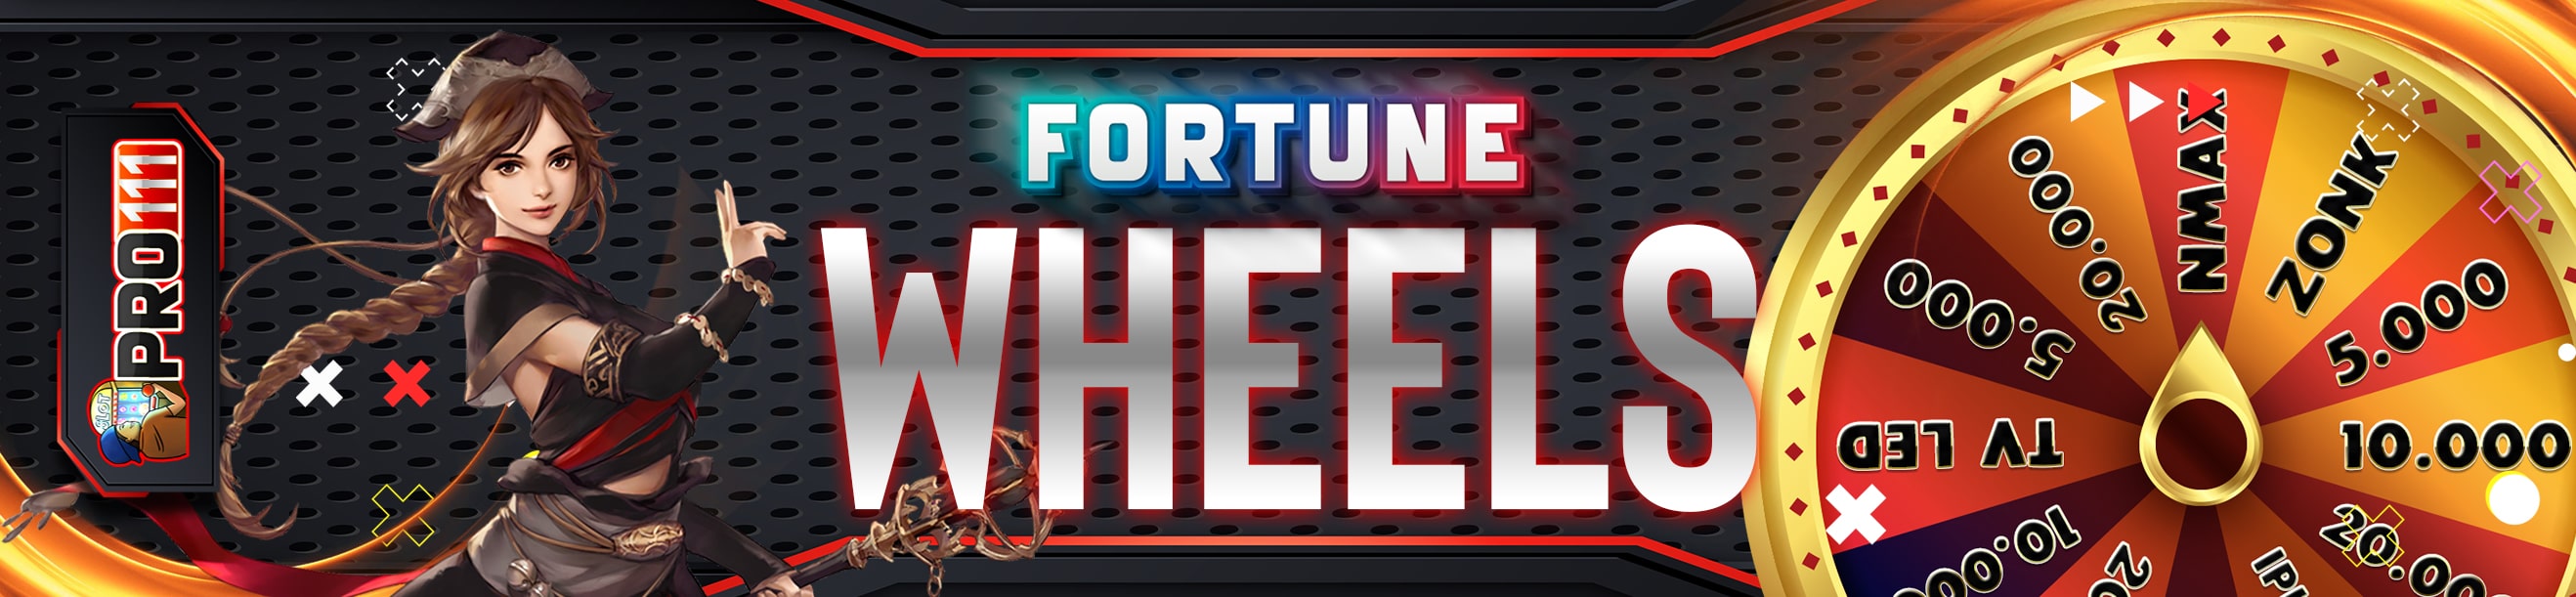 fortune wheel